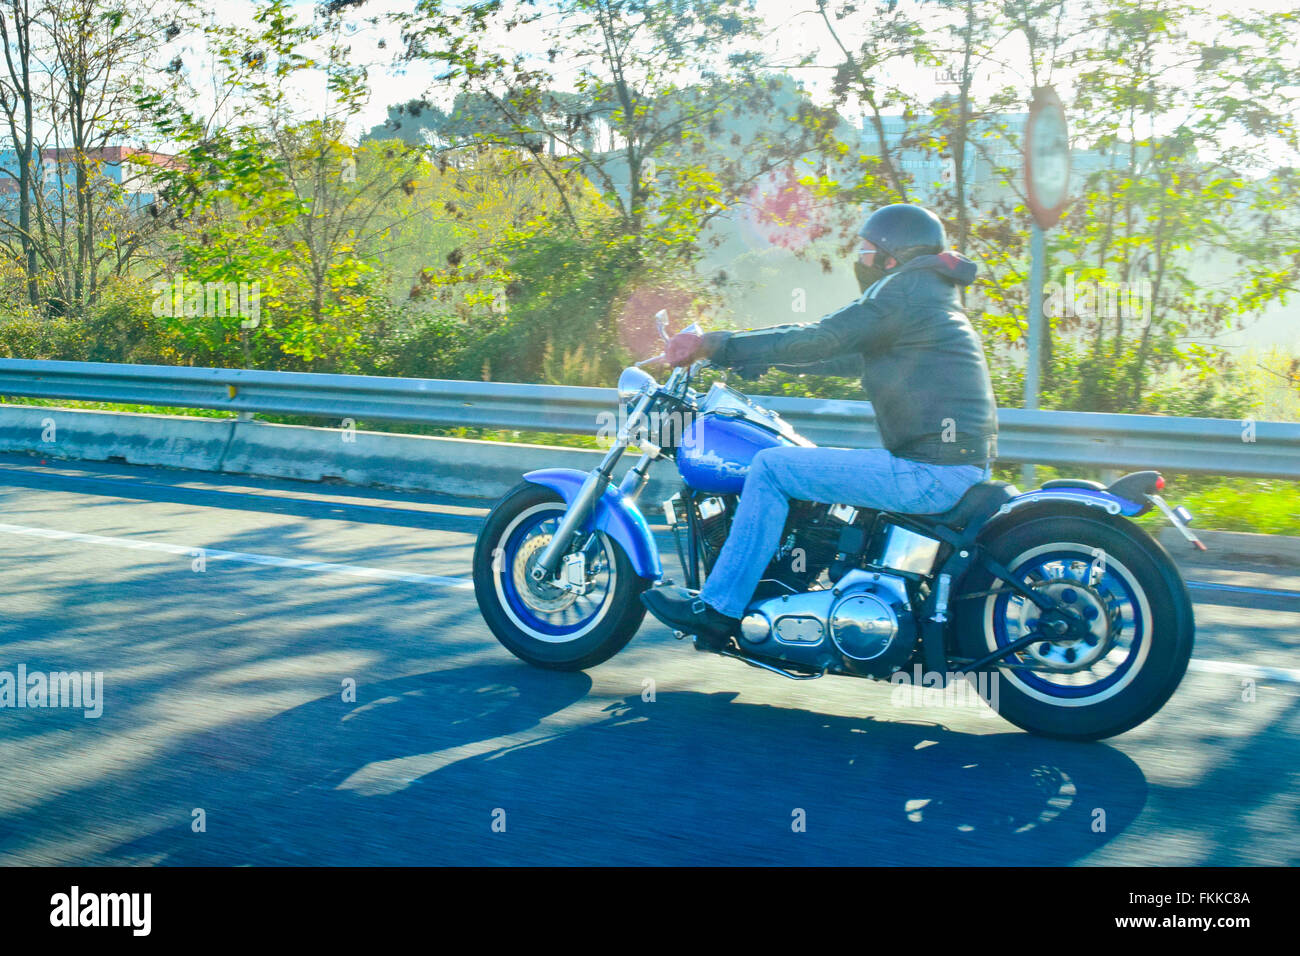 Uomo con casco in sella Harley Davidson Moto Foto stock - Alamy